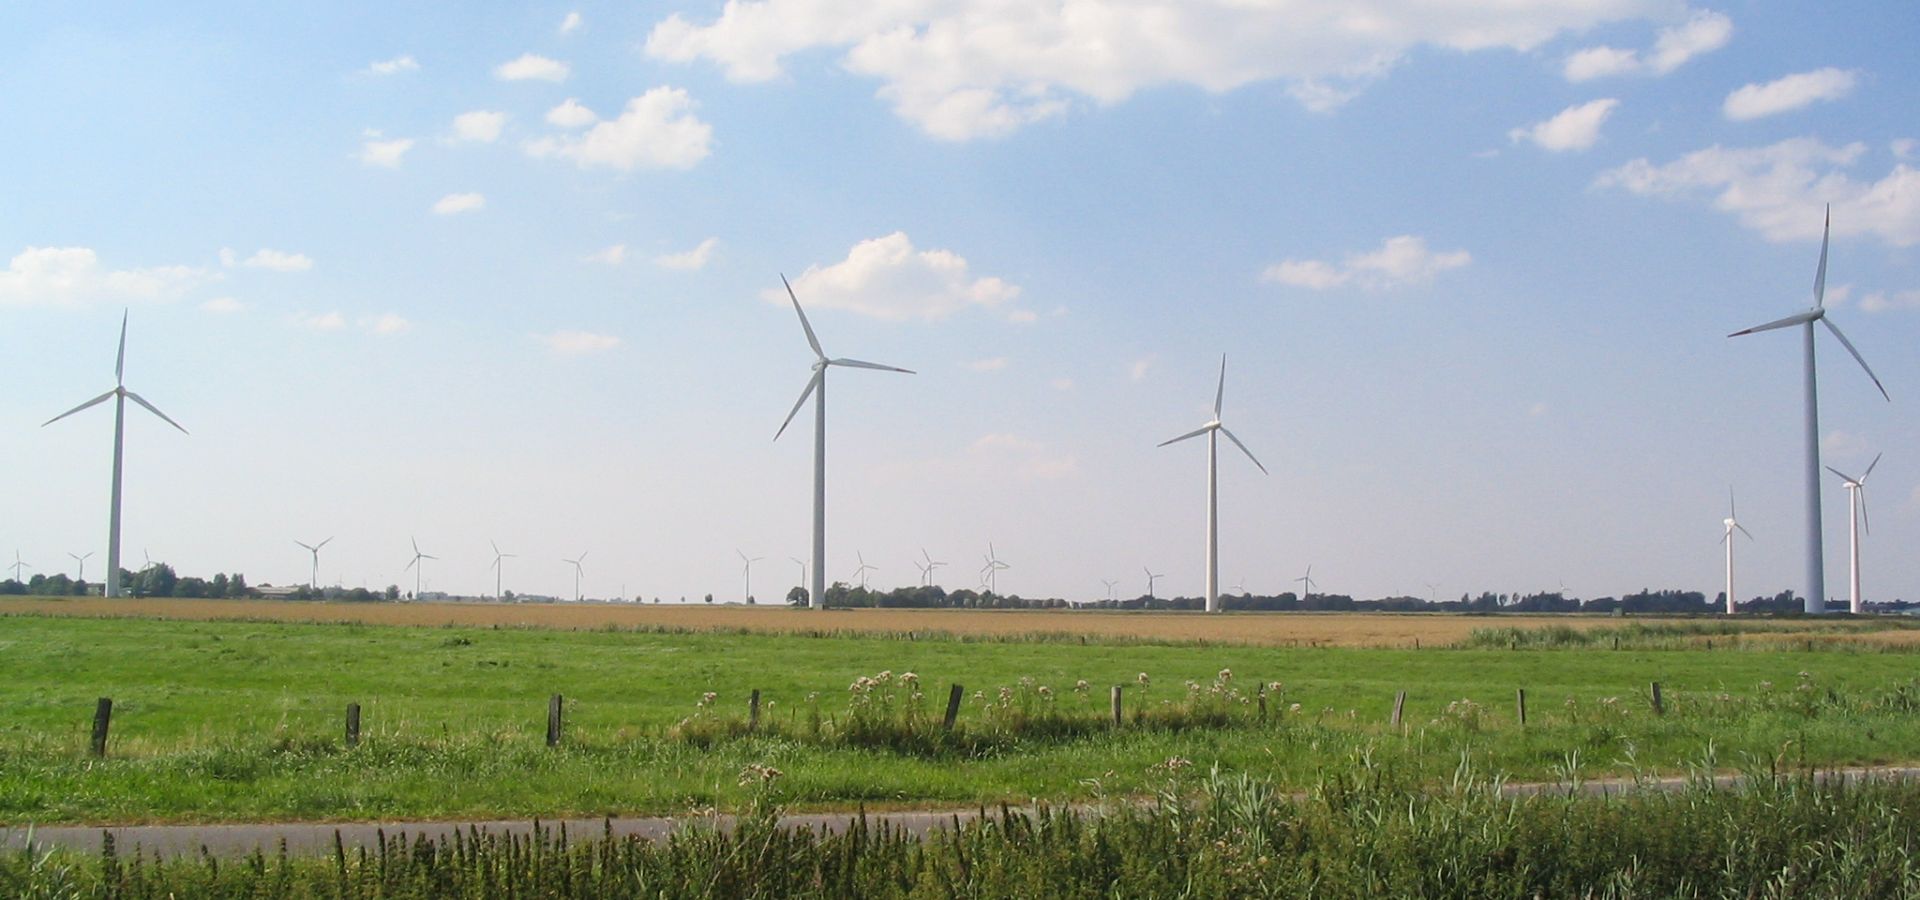 A grassland and windmills